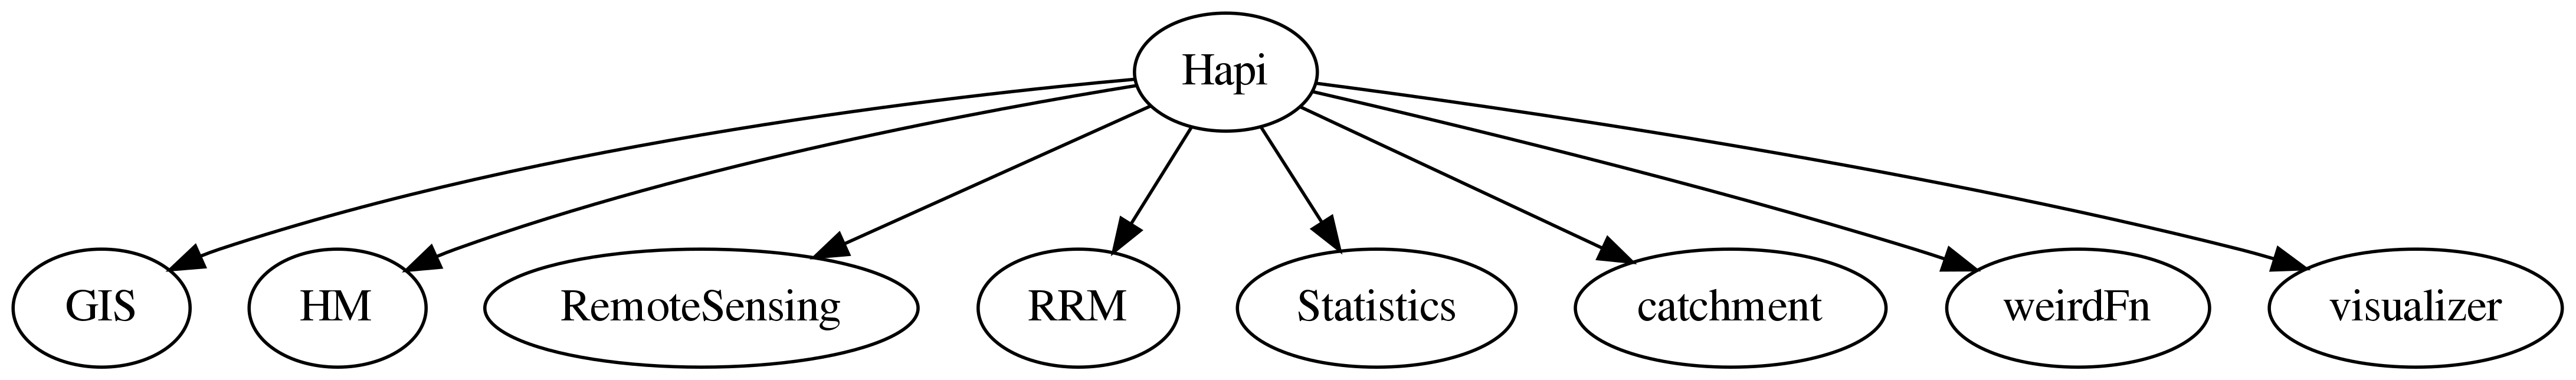 digraph Linking {
Hapi -> GIS;
Hapi -> HM;
Hapi -> RemoteSensing;
Hapi -> RRM;
Hapi -> Statistics;
Hapi -> catchment;
Hapi -> weirdFn;
Hapi -> visualizer;
dpi=400;
}